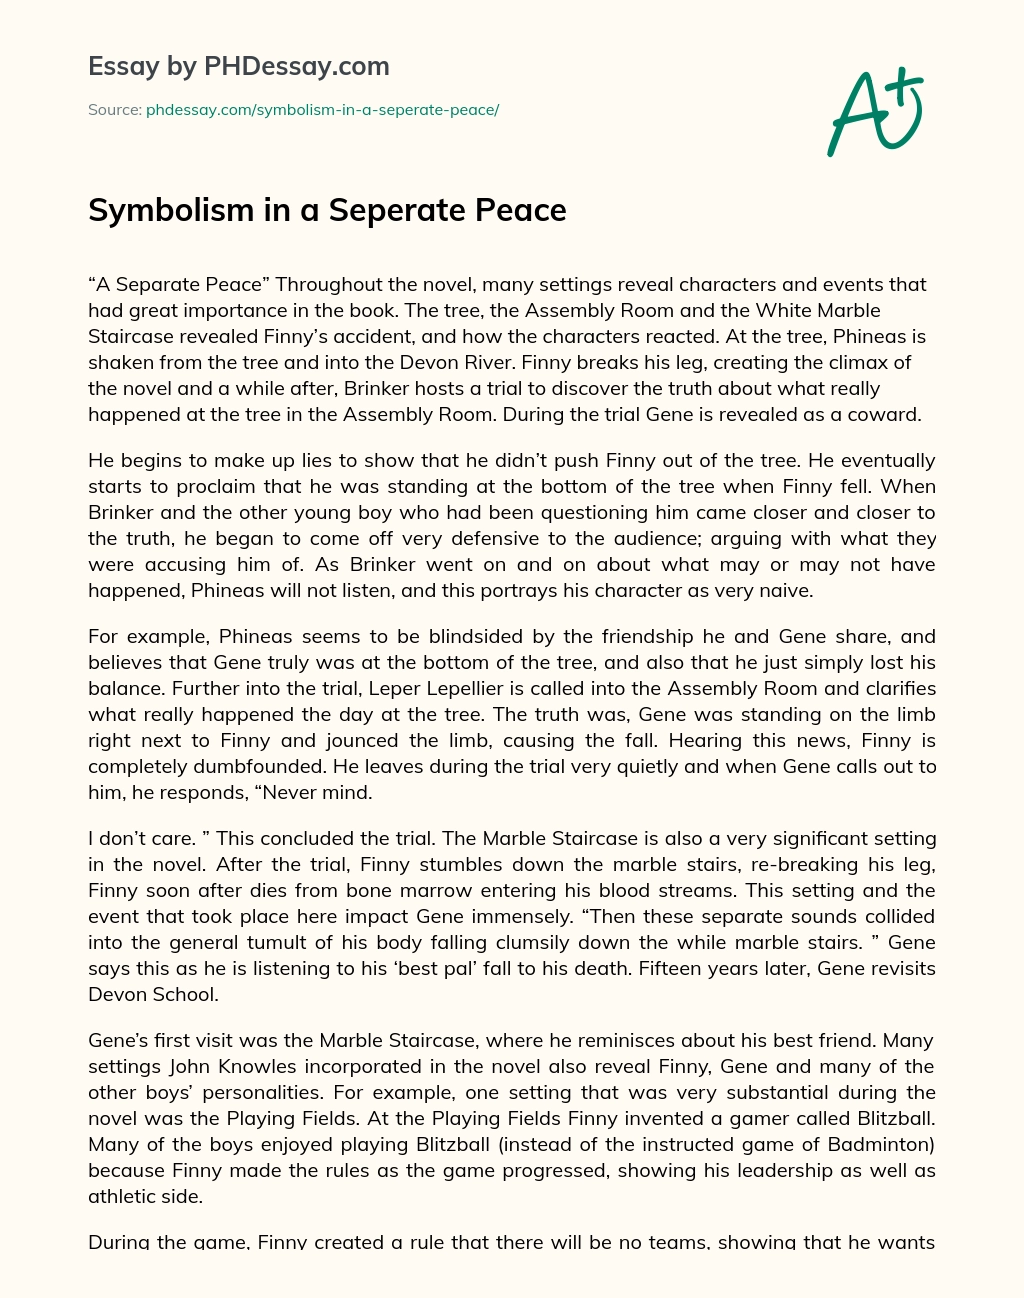 Symbolism in a Seperate Peace essay